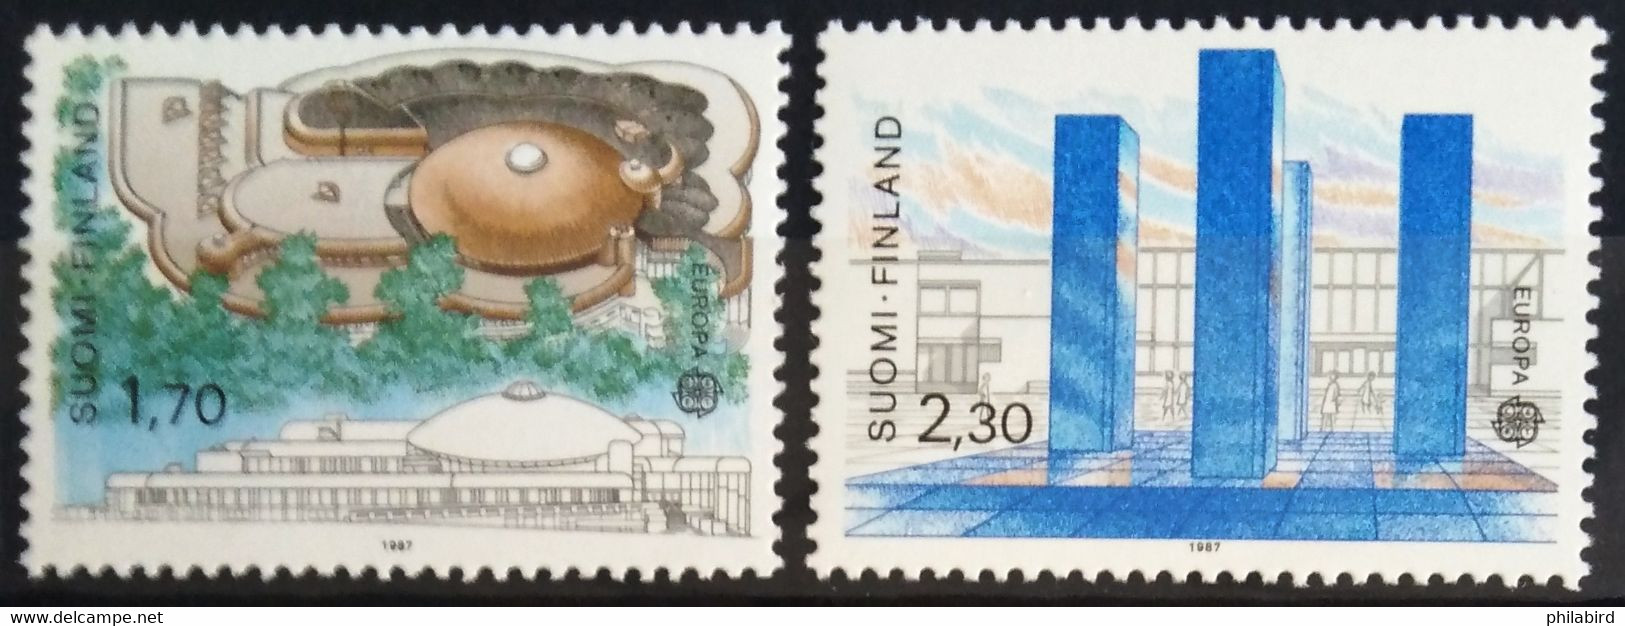 EUROPA 1987 - FINLANDE                   N° 985/986                        NEUF** - 1987